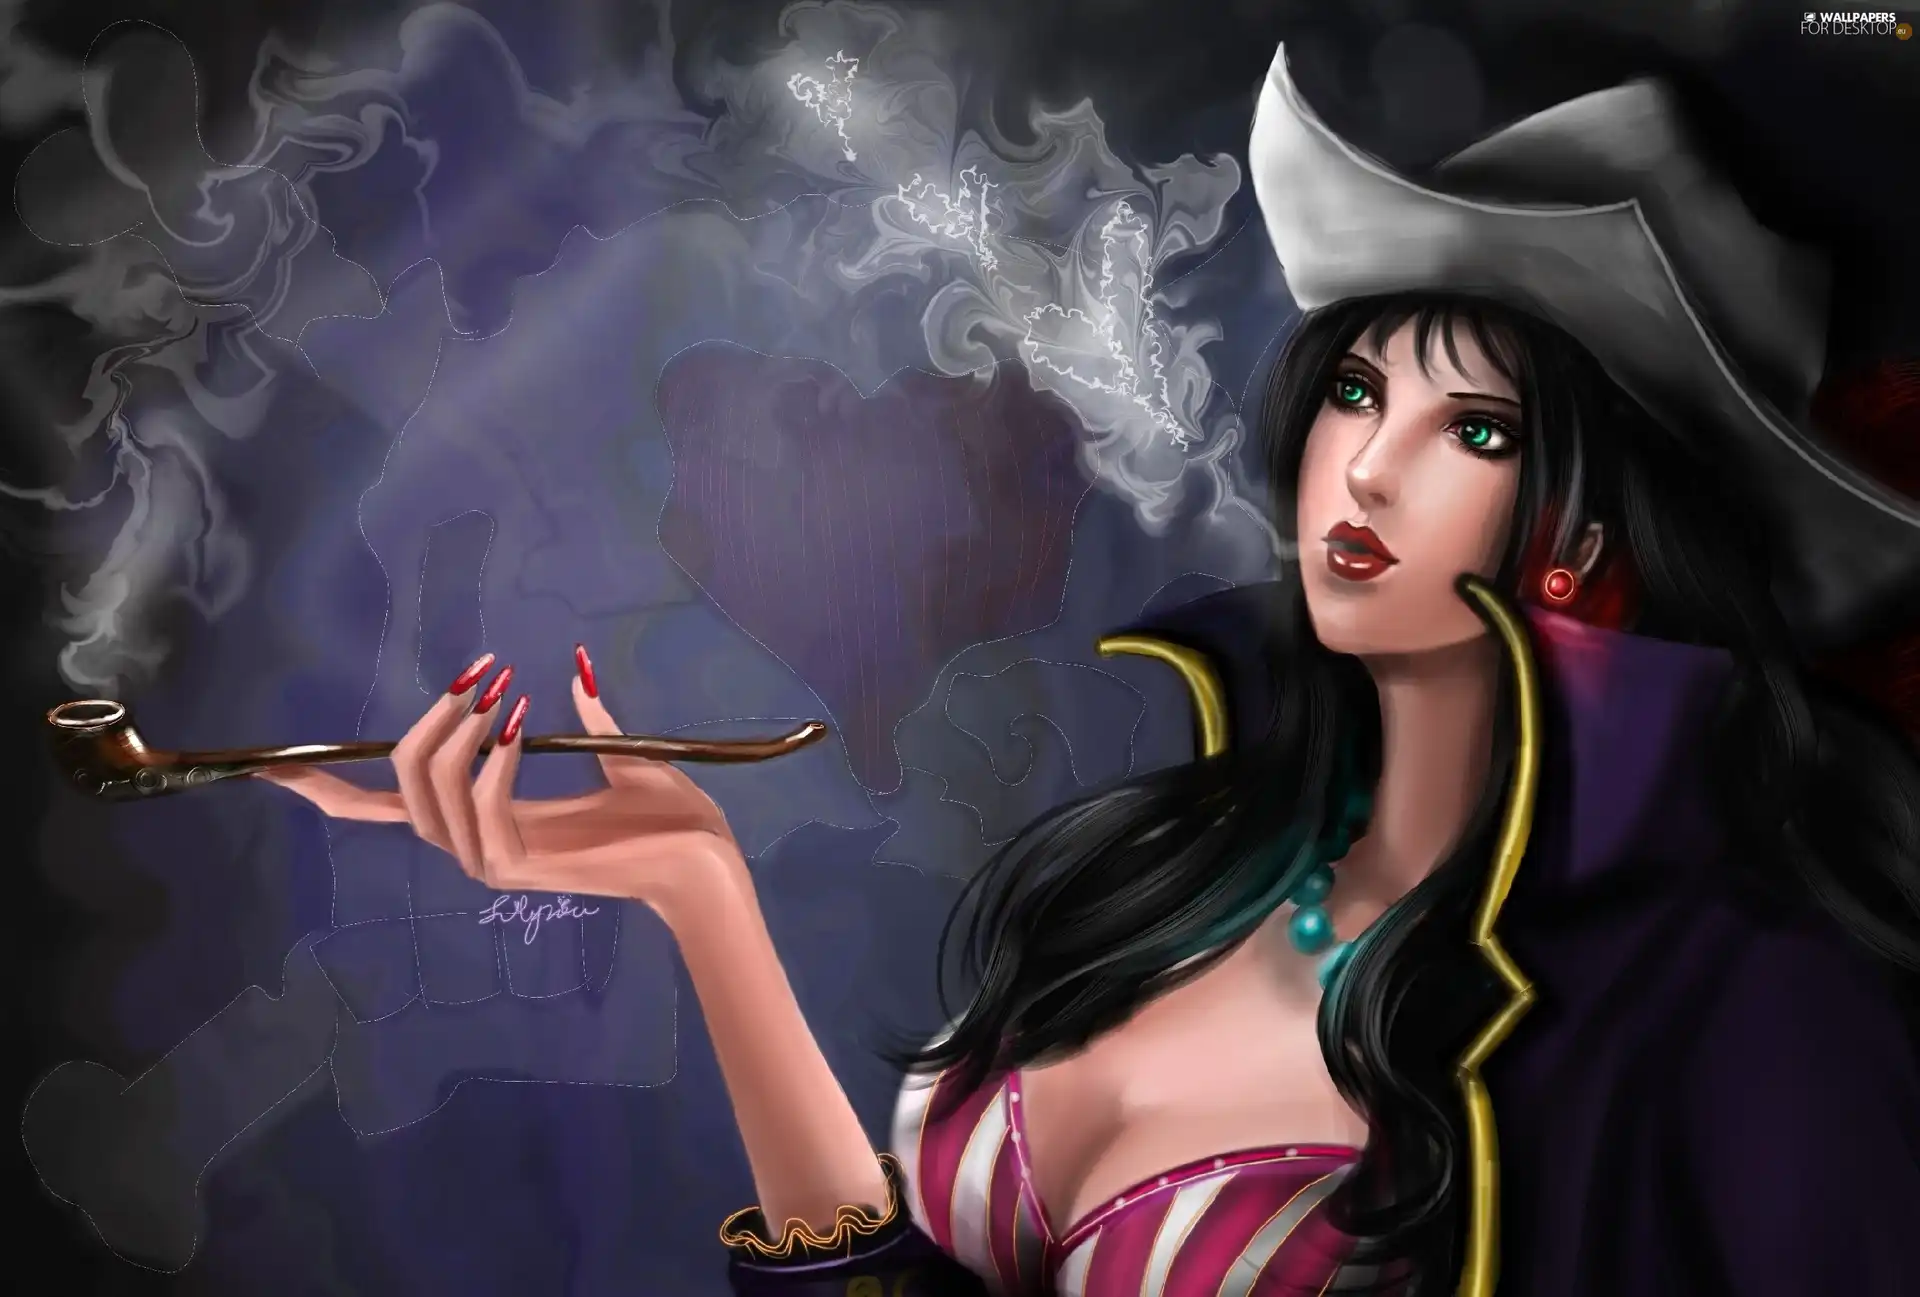 Cigarette, Women, smoke